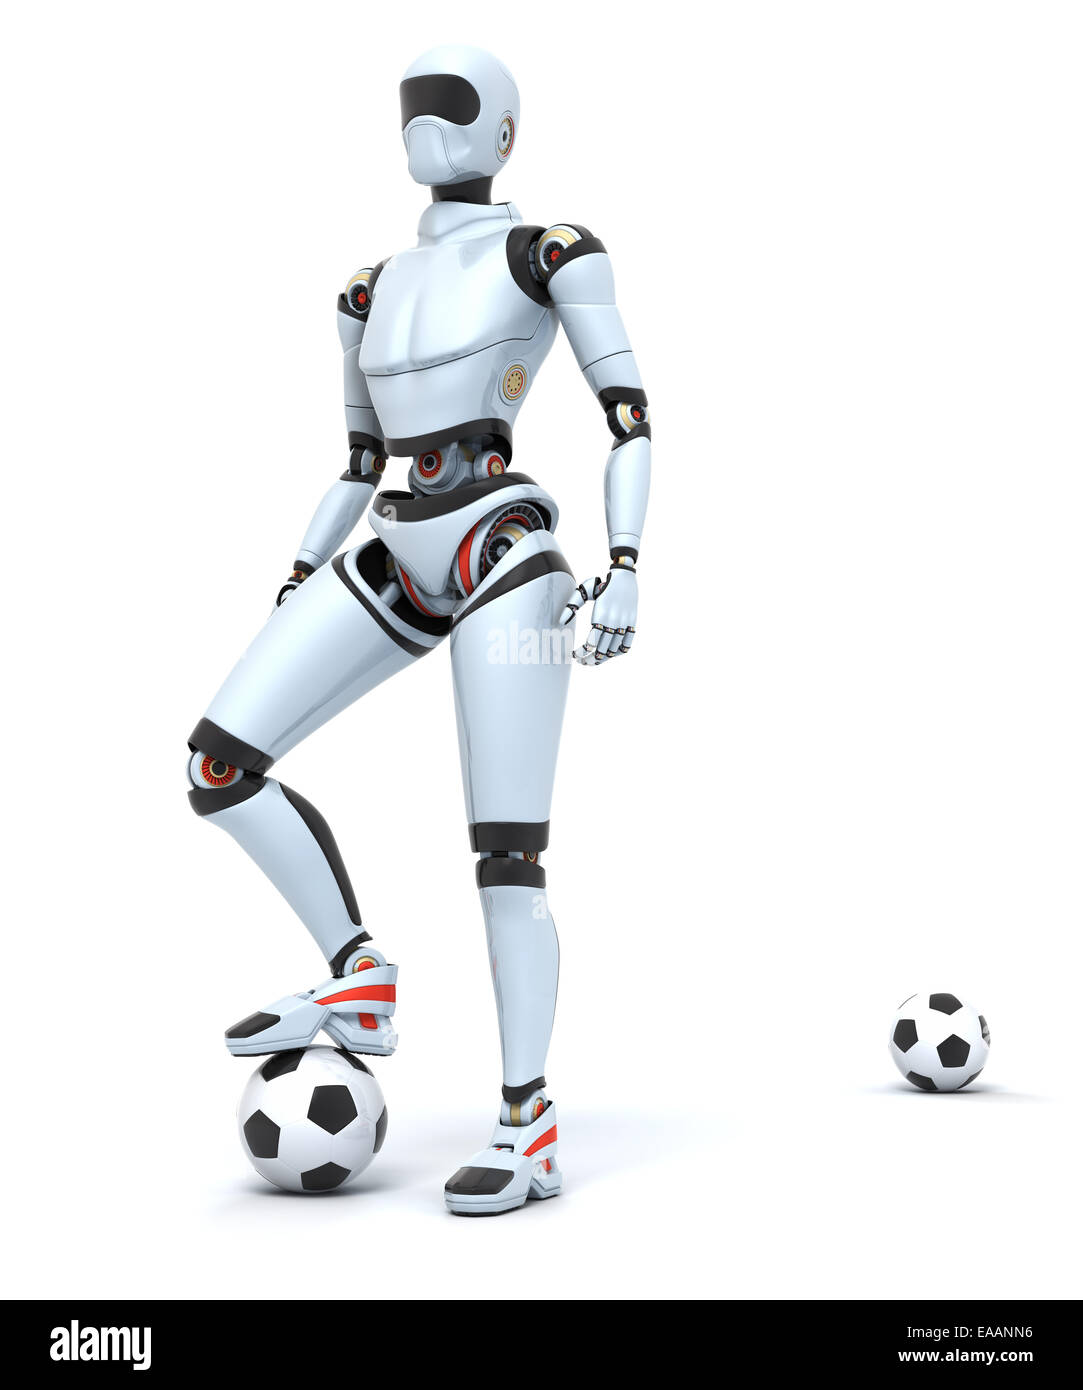 Robot de futbol fotografías e imágenes de alta resolución - Alamy